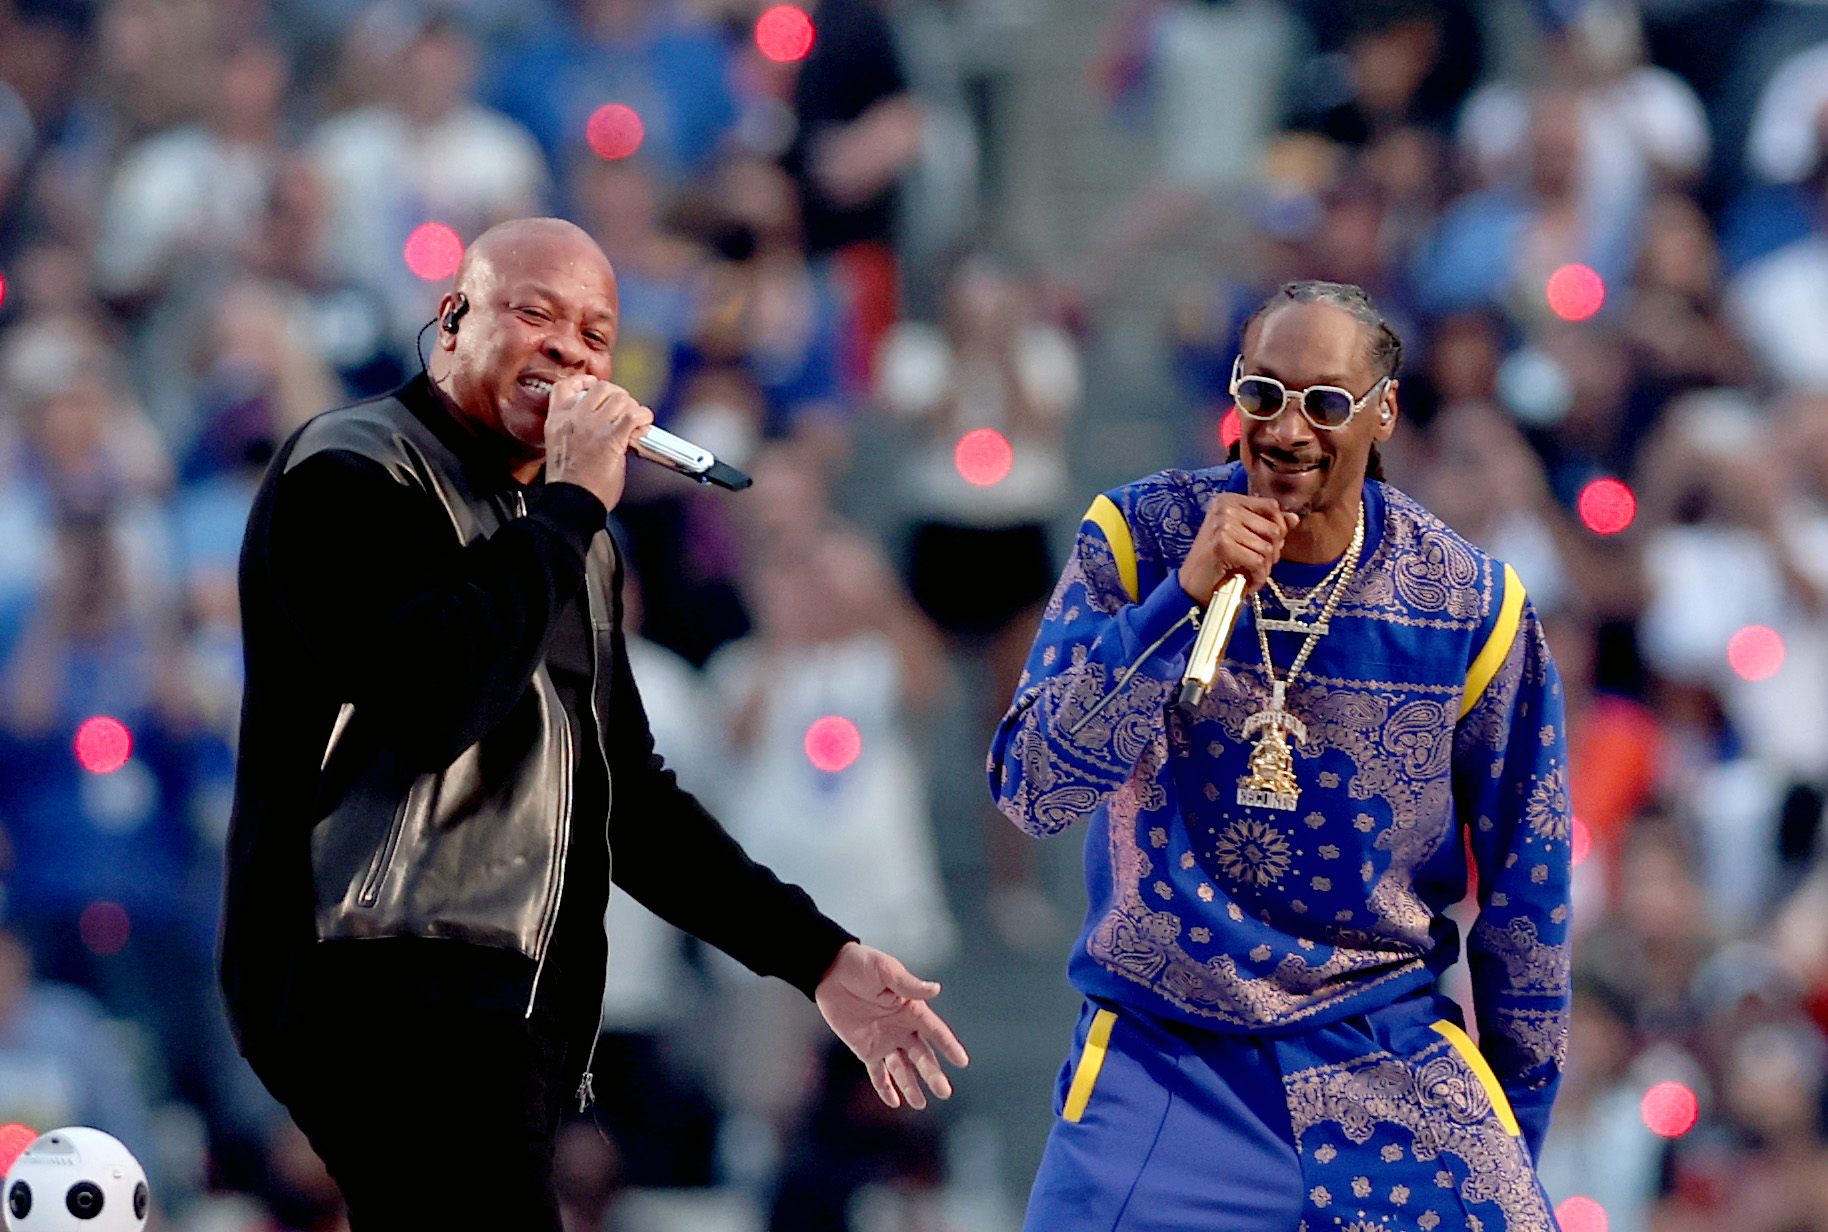 Rap Reigns Supreme at Star-Studded 2022 Super Bowl Halftime Show